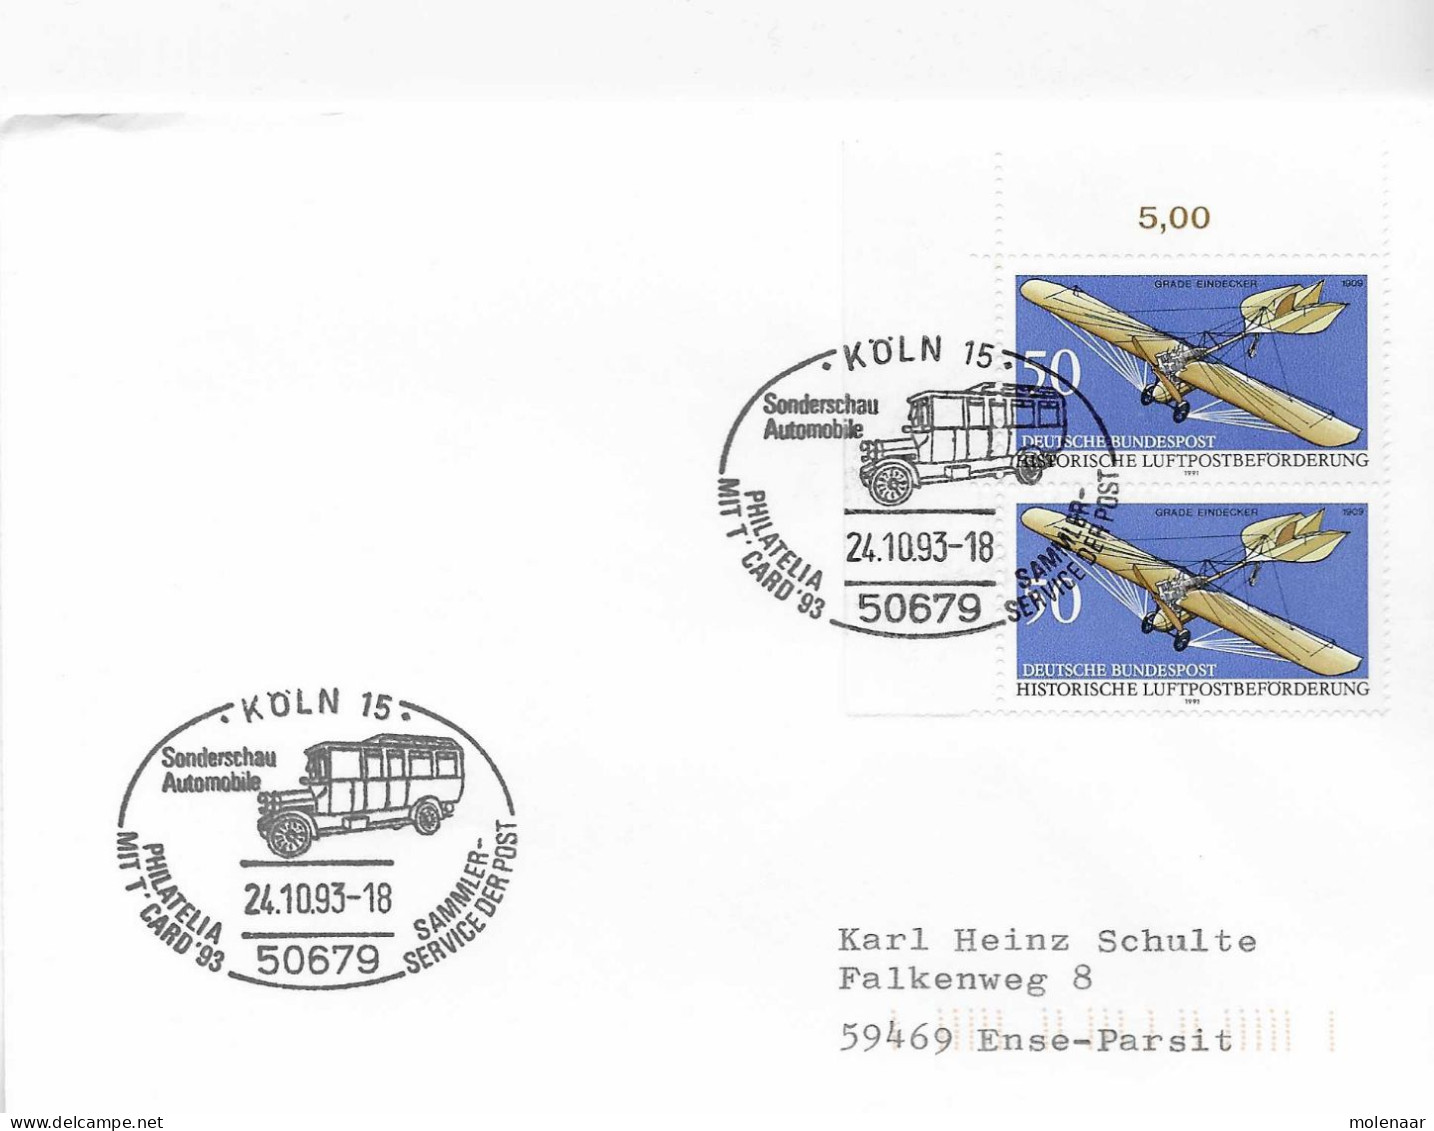 Postzegels > Europa > Duitsland > West-Duitsland > 1990-1999 > Brief Met 2x 1523 (17320) - Storia Postale